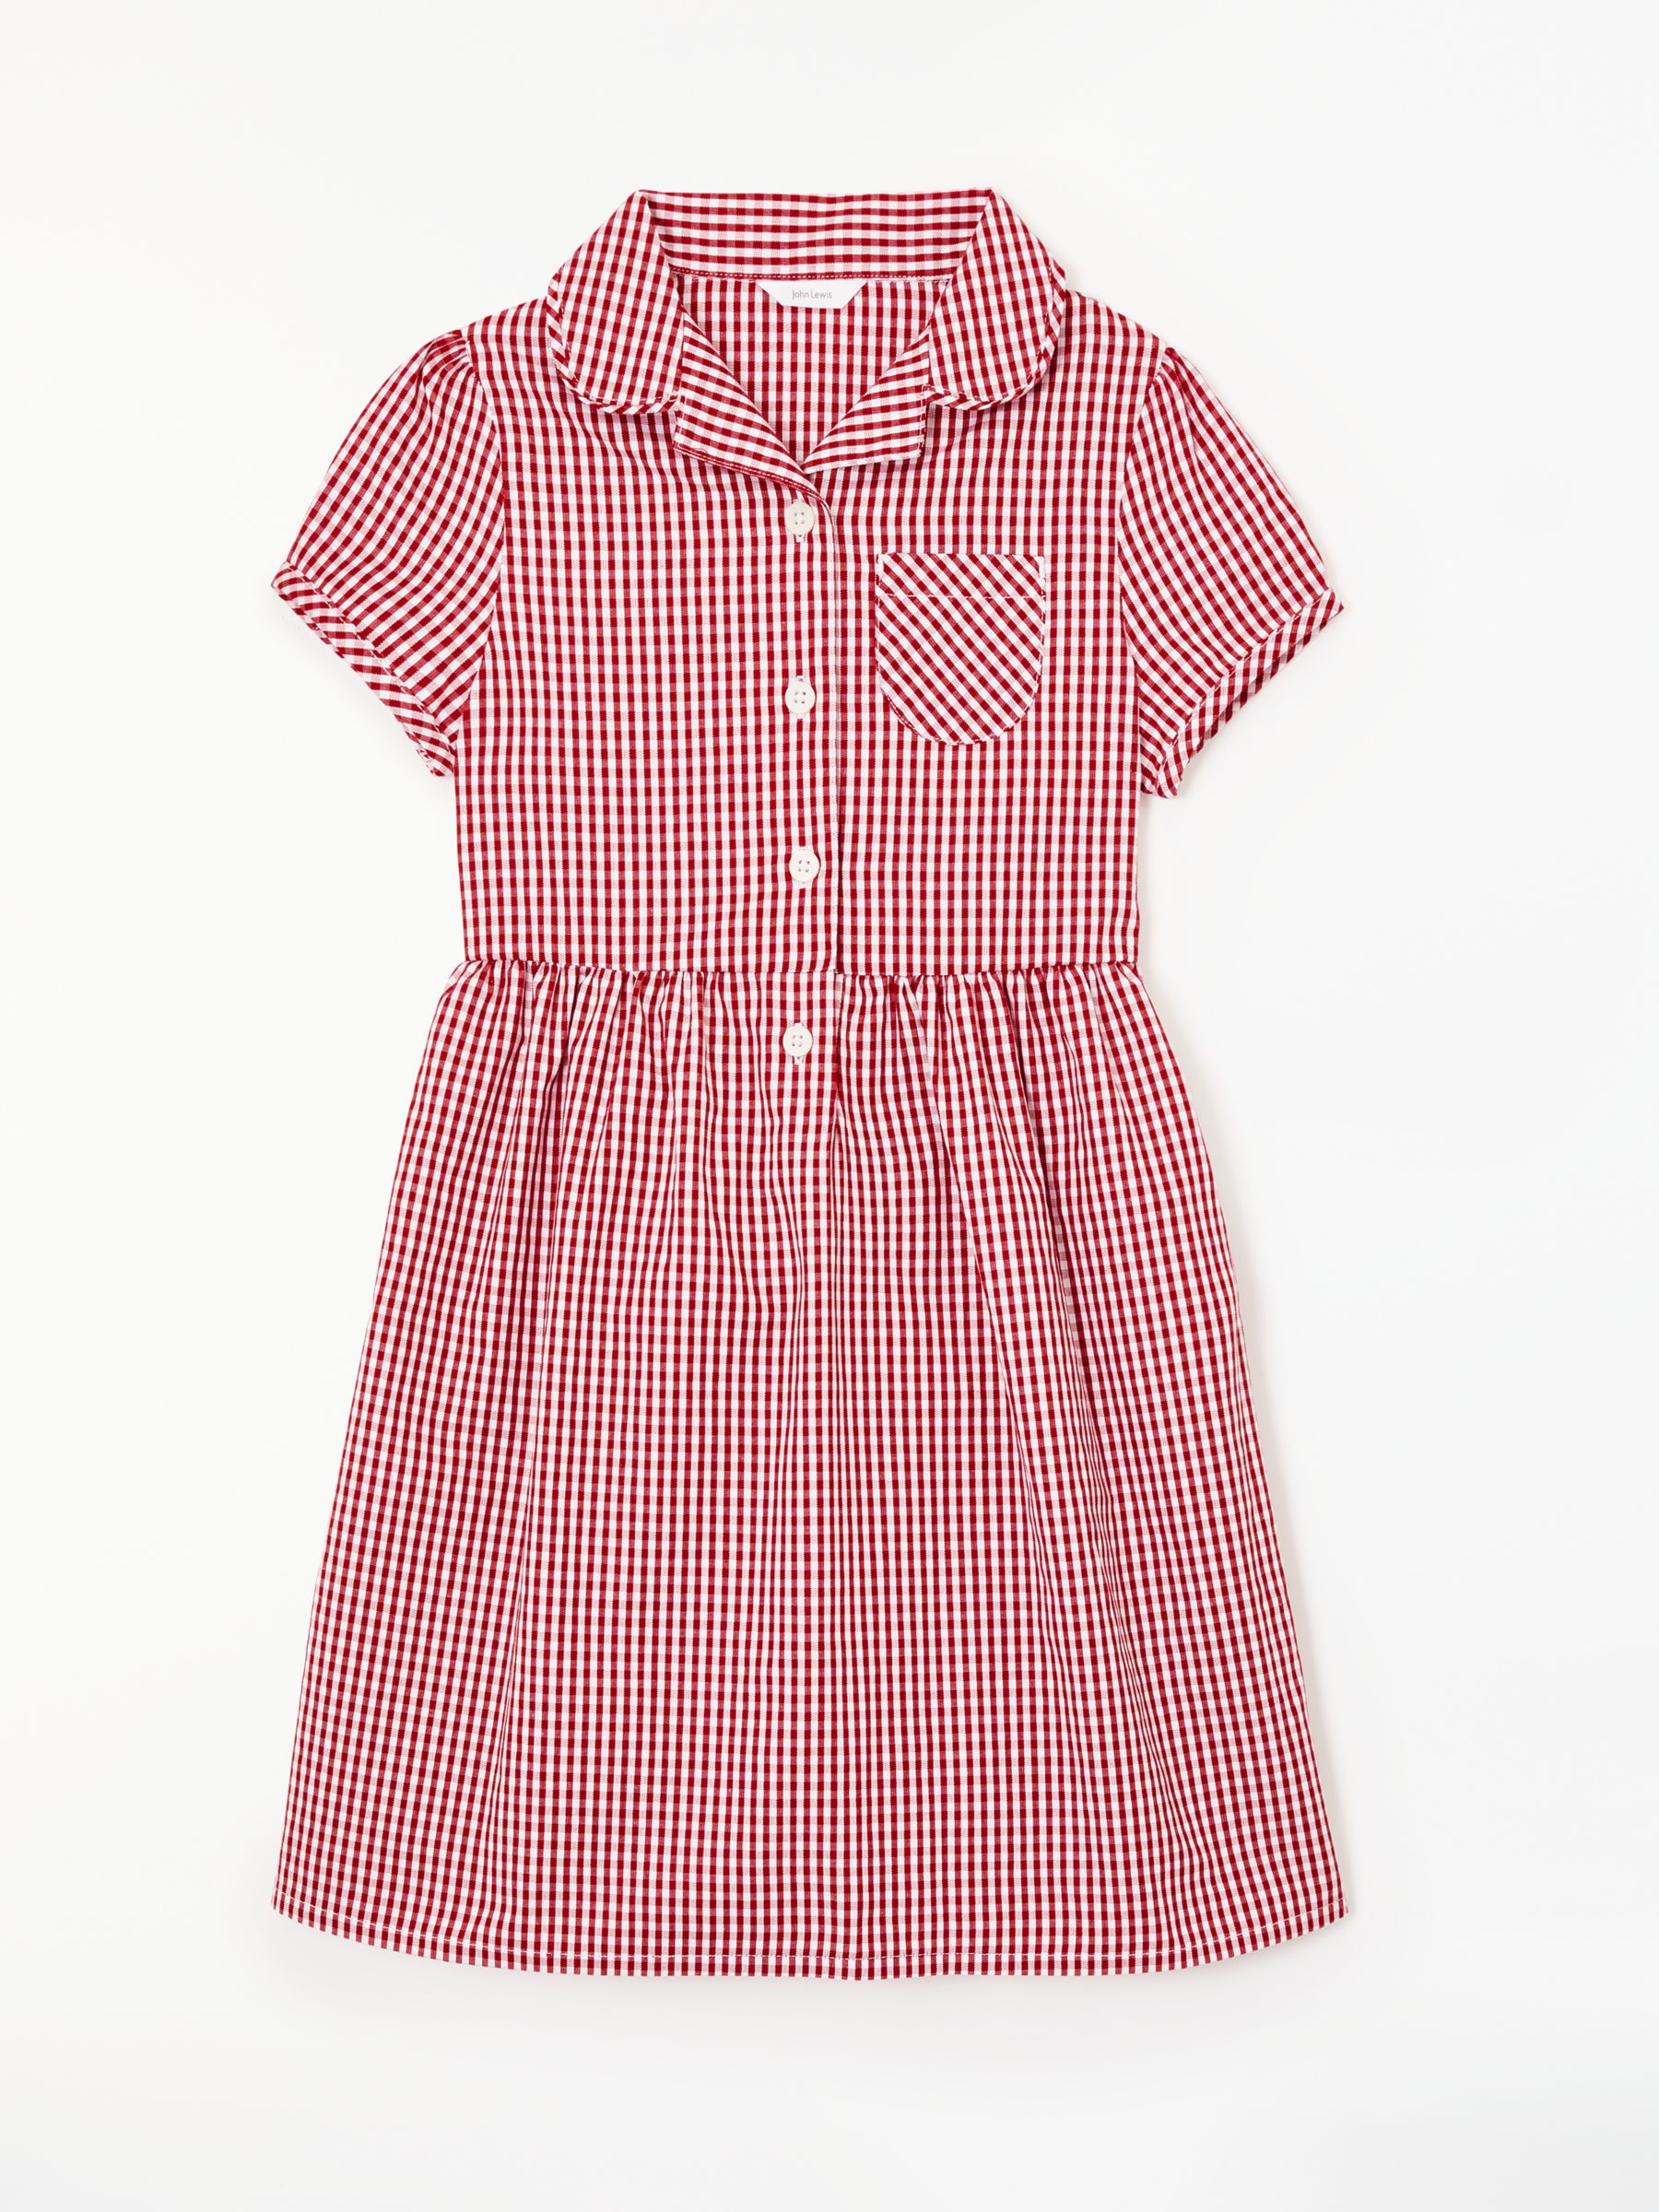 red toddler summer dress